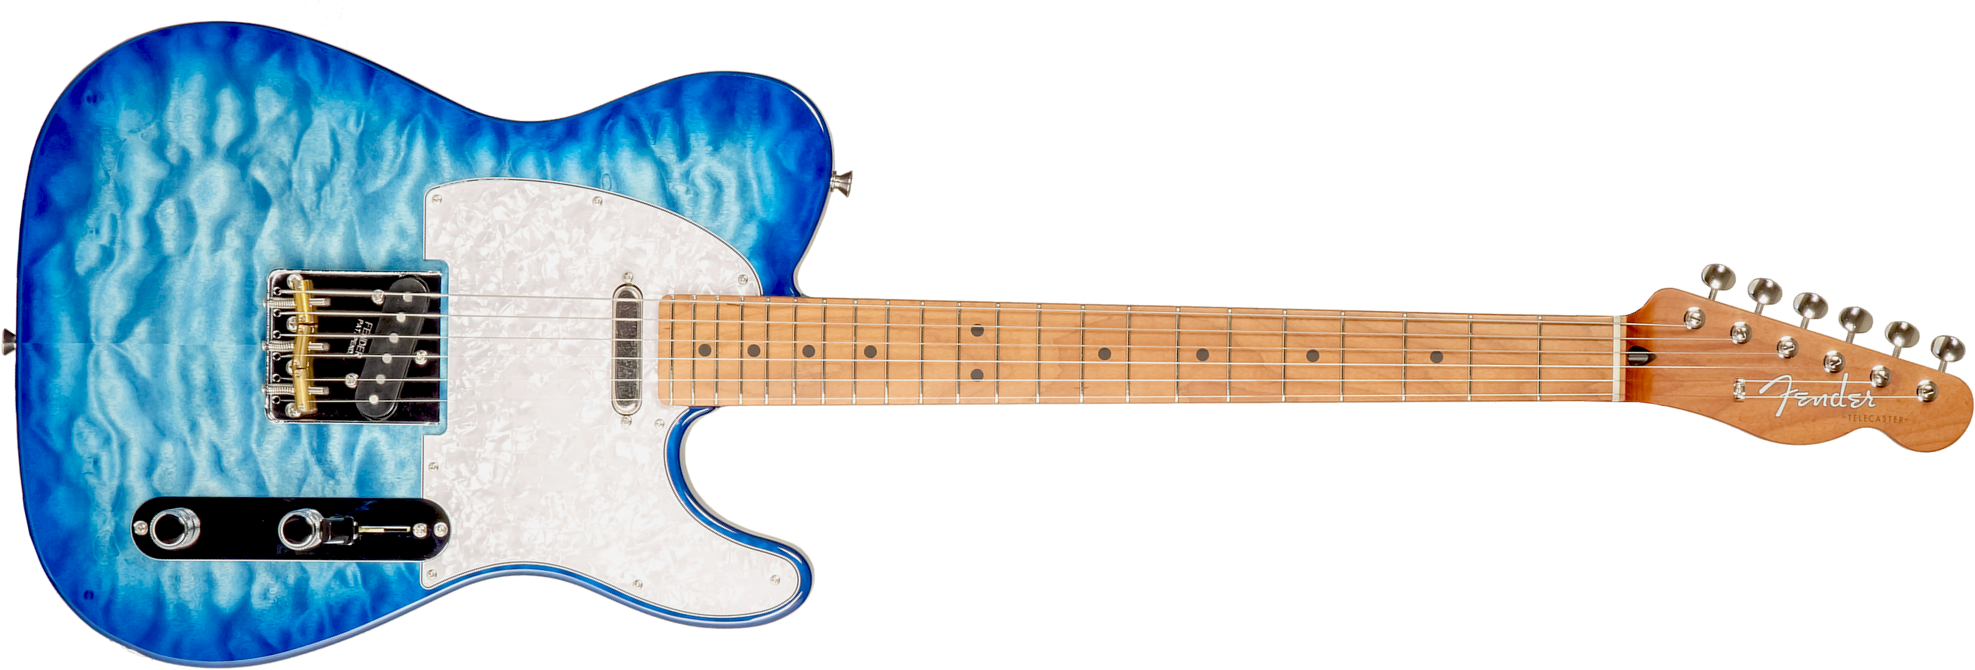 Fender Tele Hybrid Ii Jap 2s Ht Mn - Aqua Blue - Guitarra eléctrica con forma de tel - Main picture